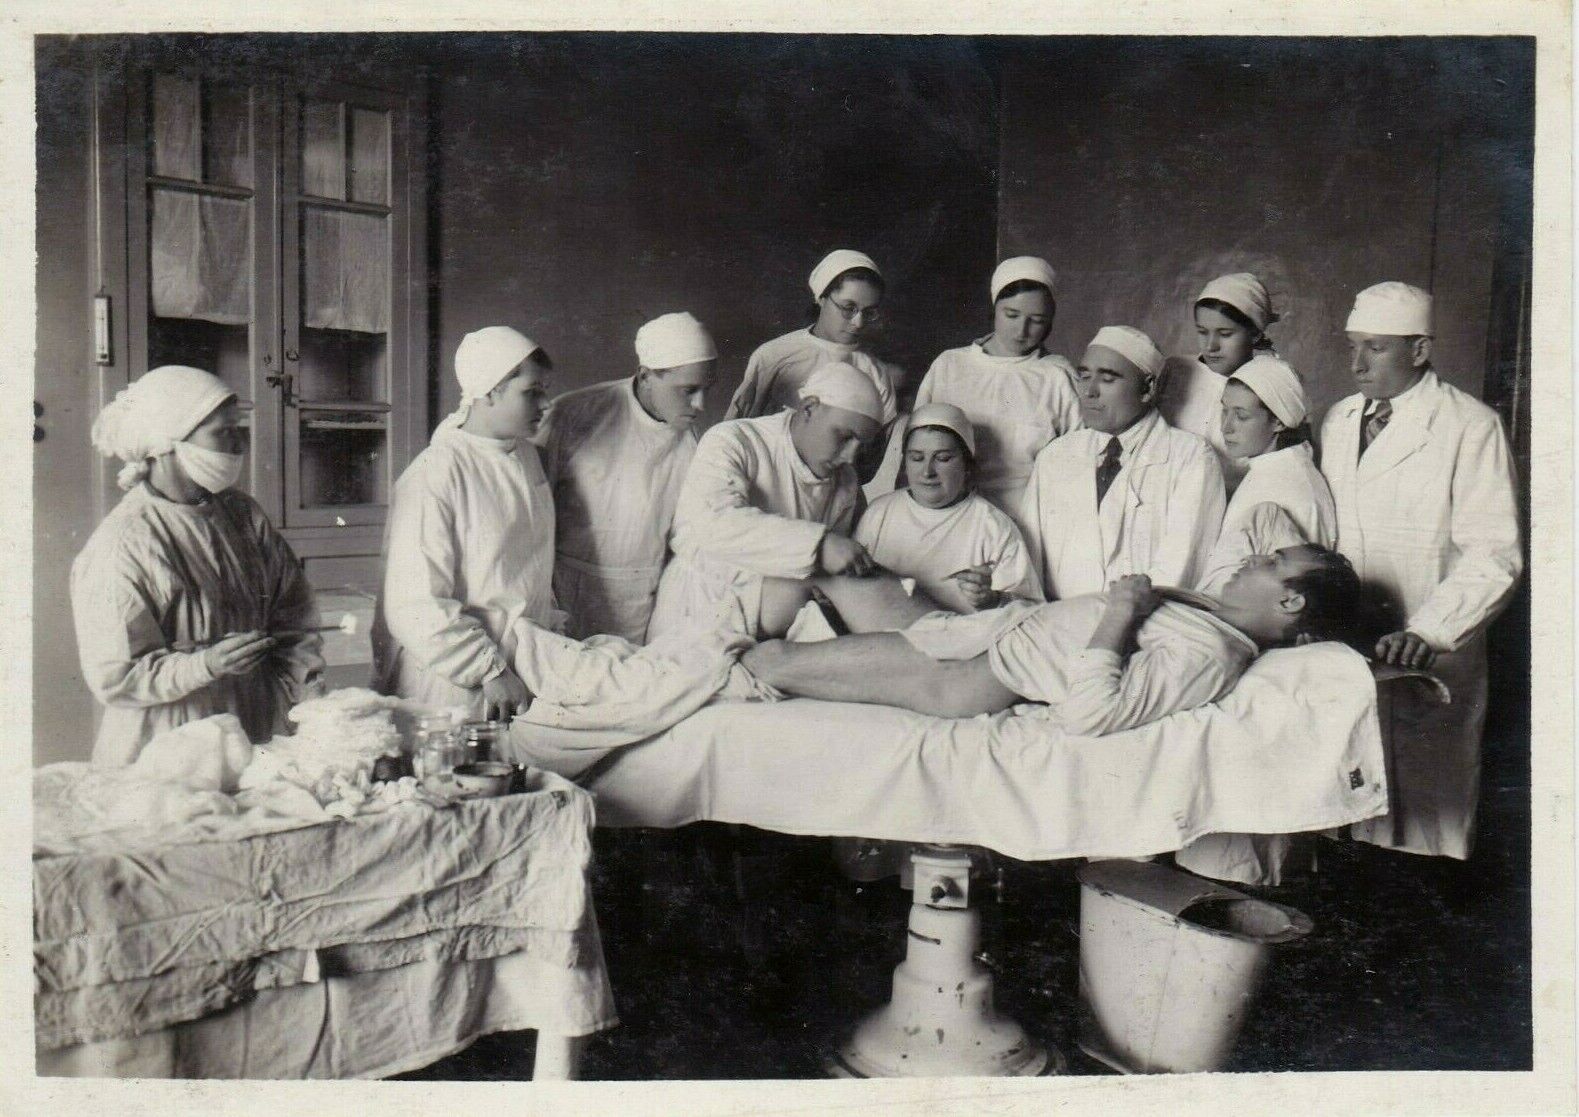 1940s Hospital Circumcision Surgery Surgeons Doctors students odd Russian photo